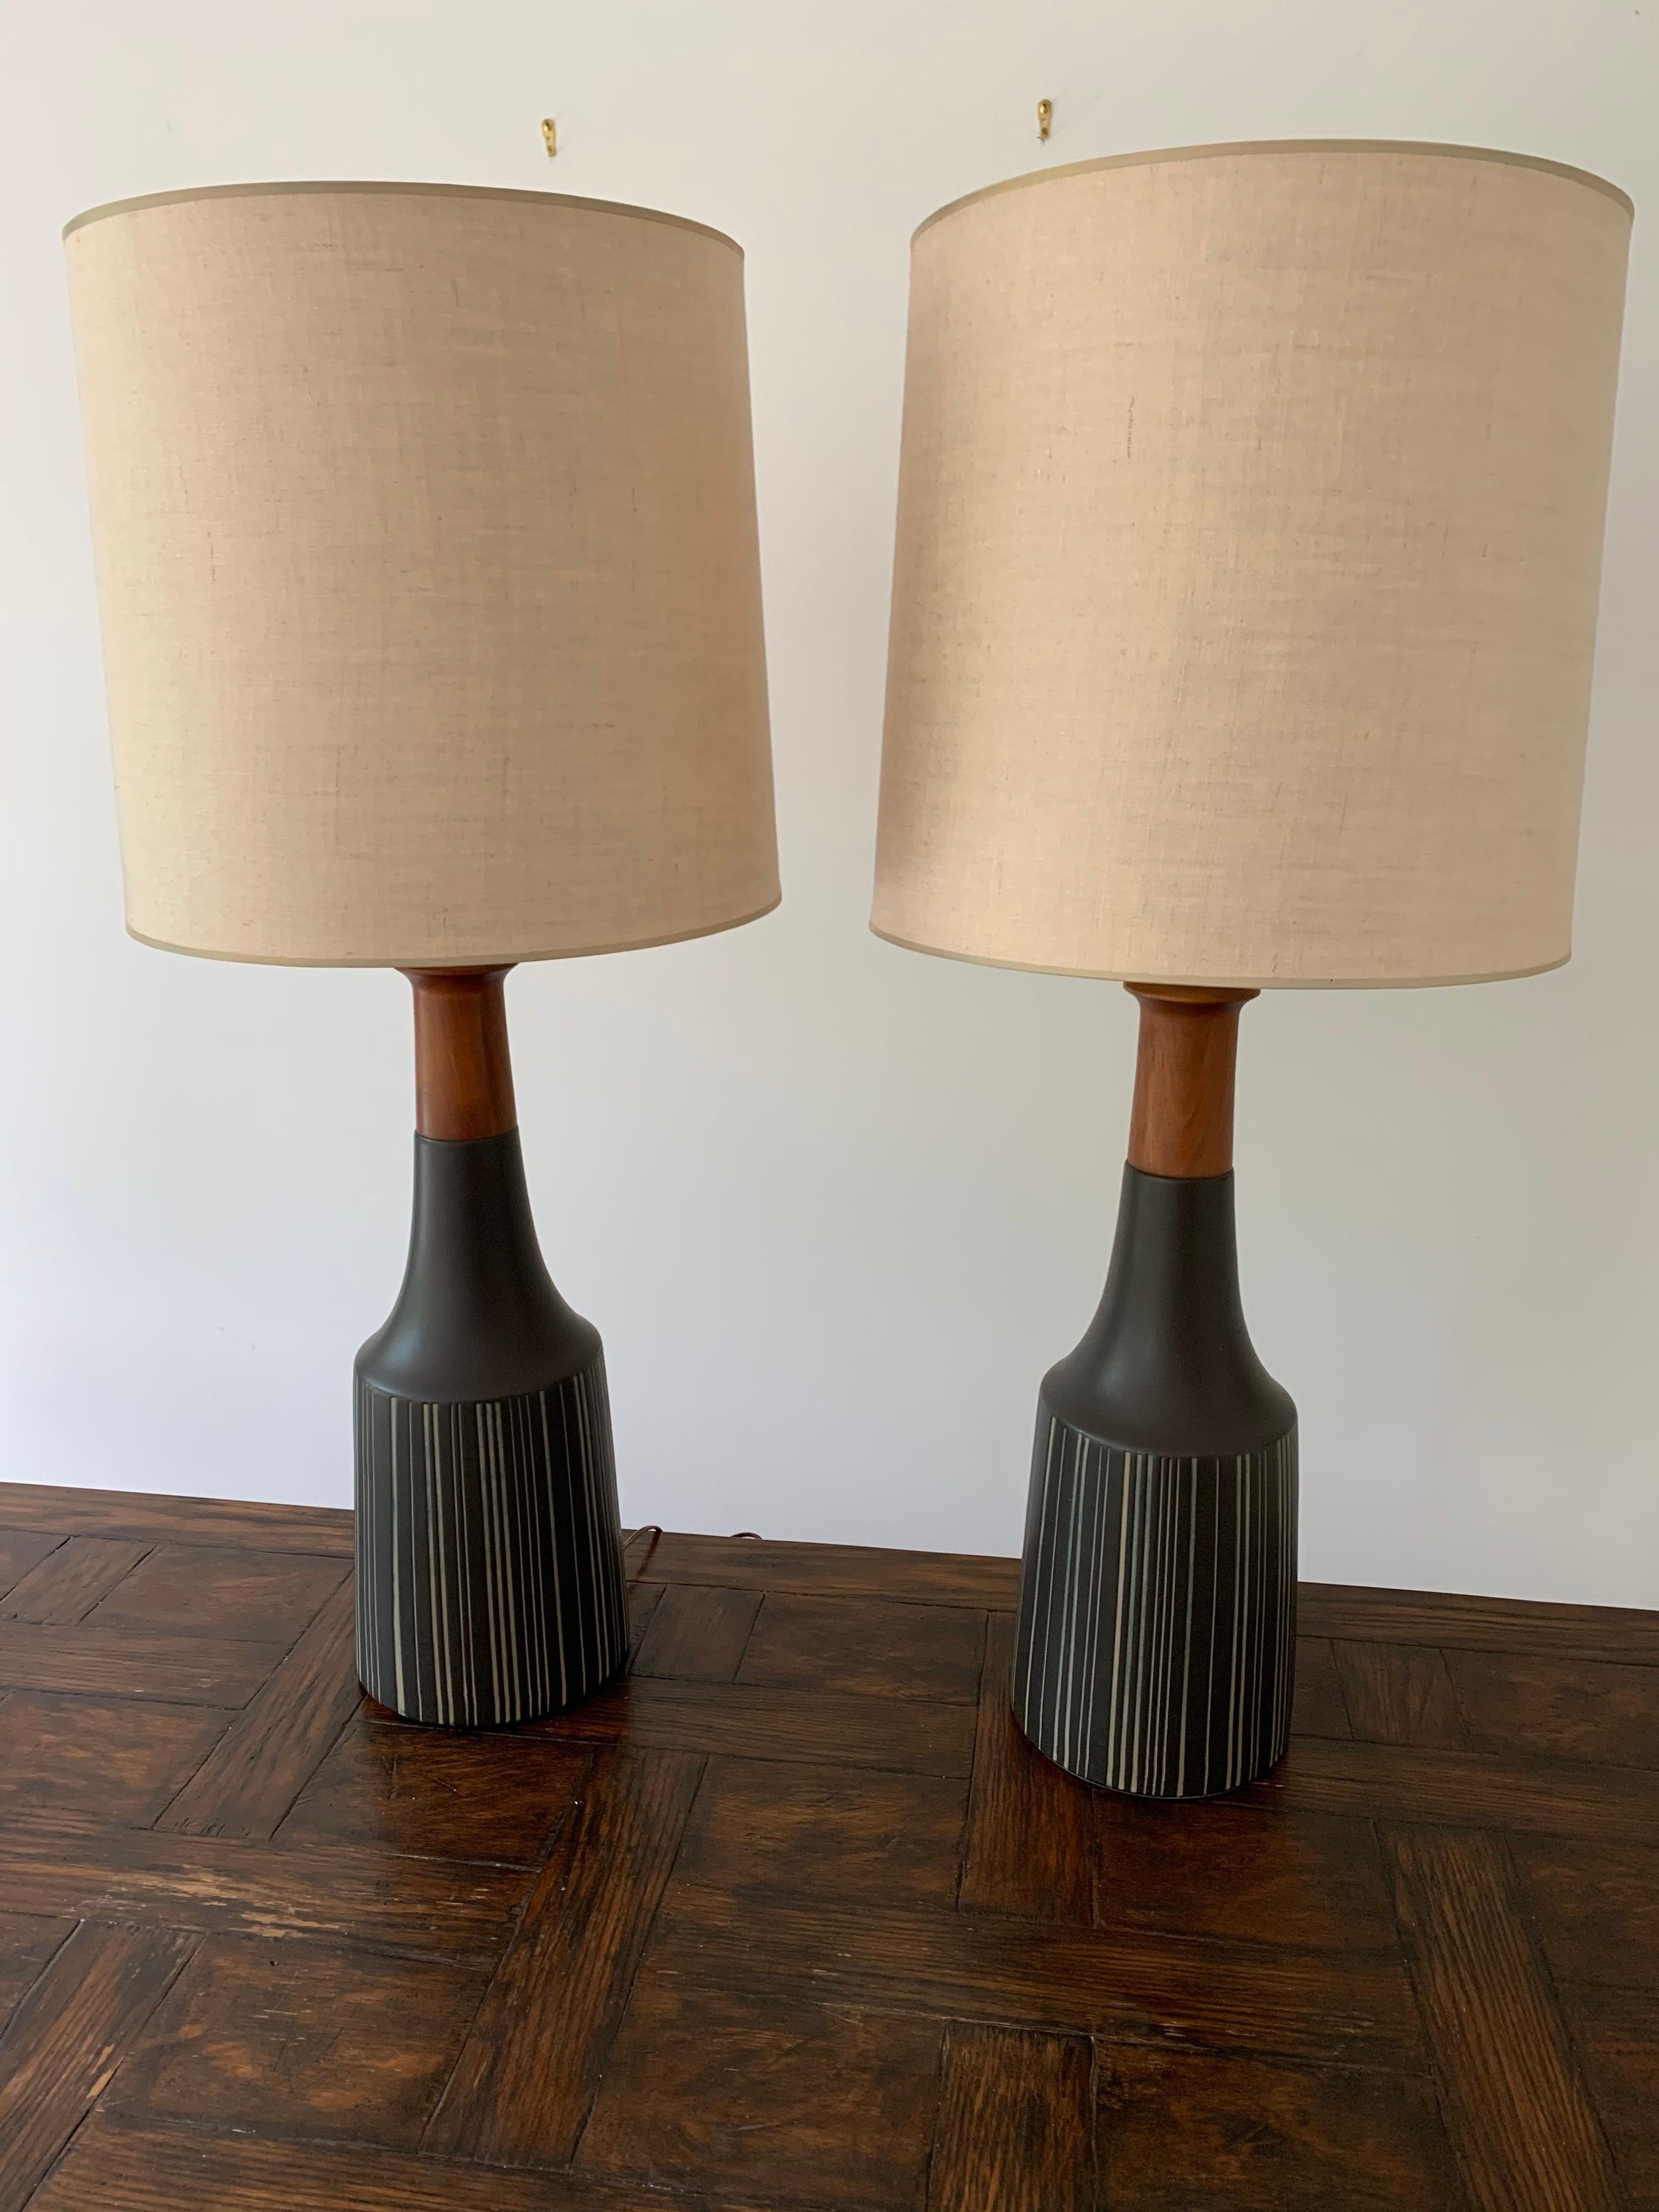 Gordon Martz & Jane Marshall Martz Ceramic Table Lamps In Good Condition For Sale In Washington, DC